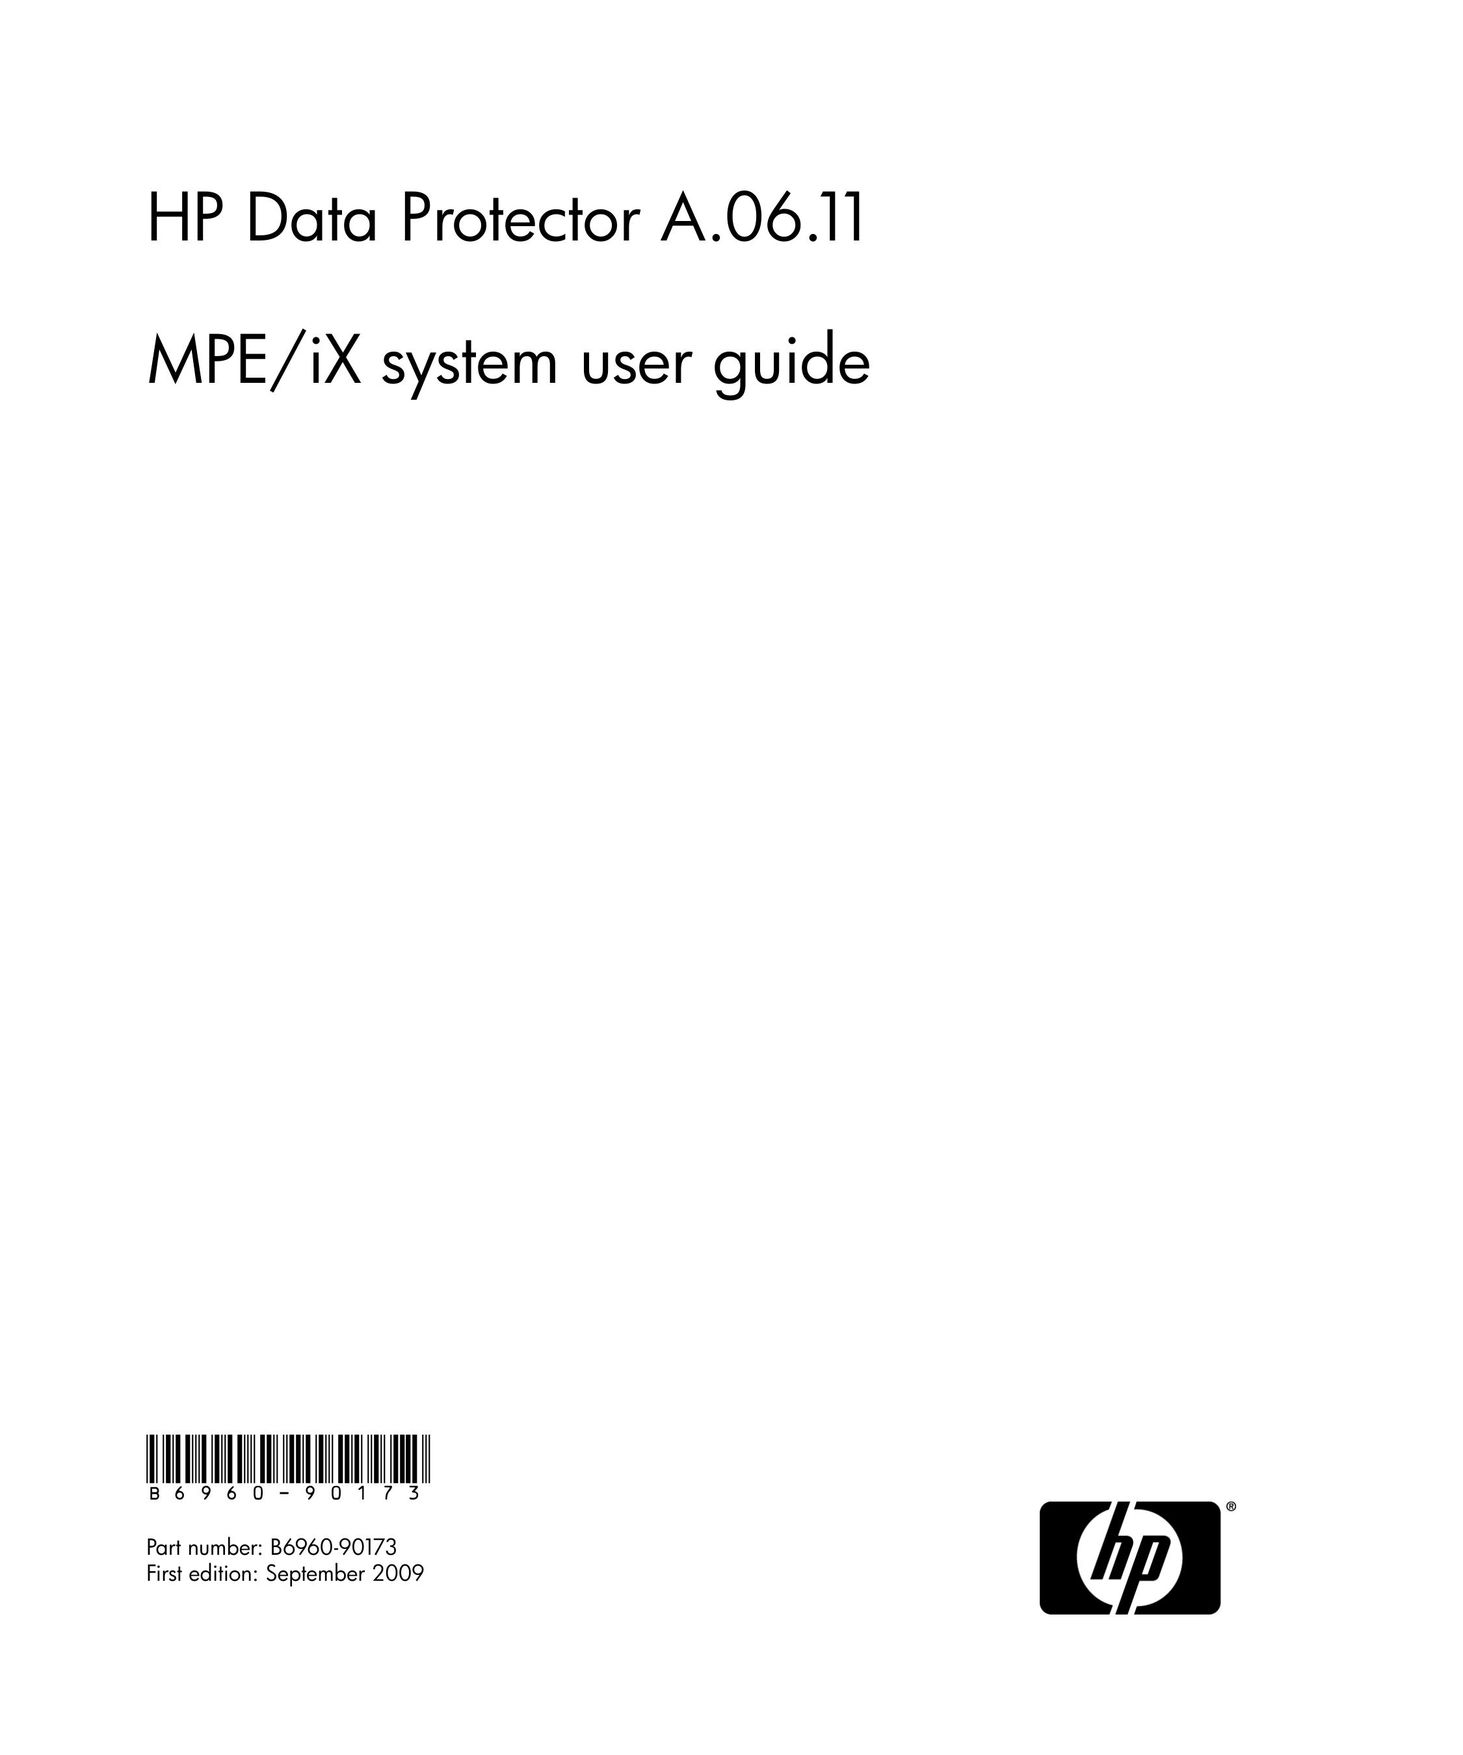 HP (Hewlett-Packard) A.06.11 Surge Protector User Manual